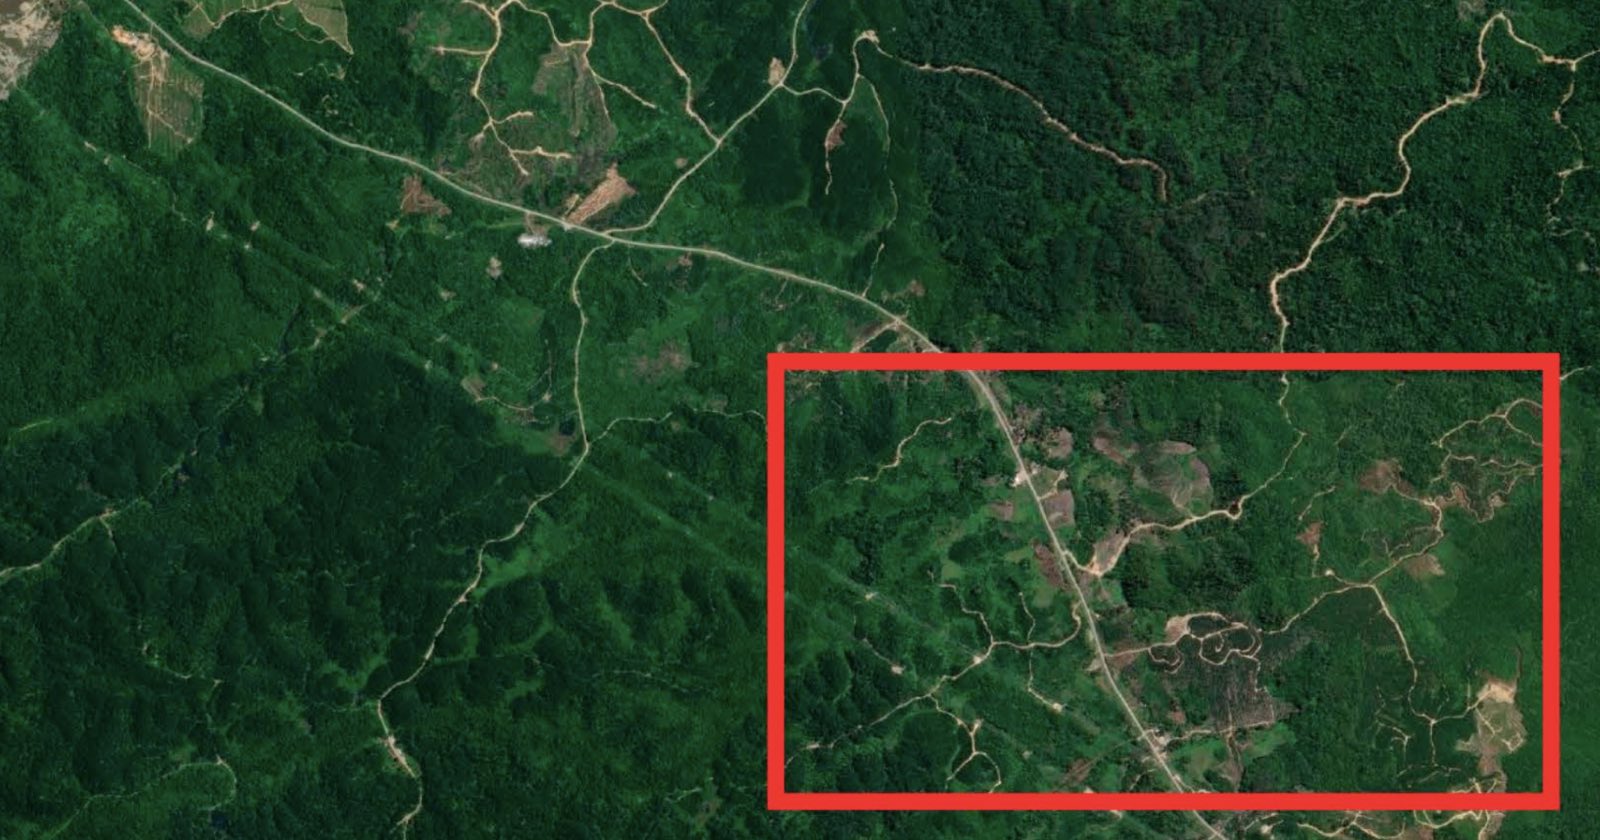  satellite photos combine reveal secret roads damaging 